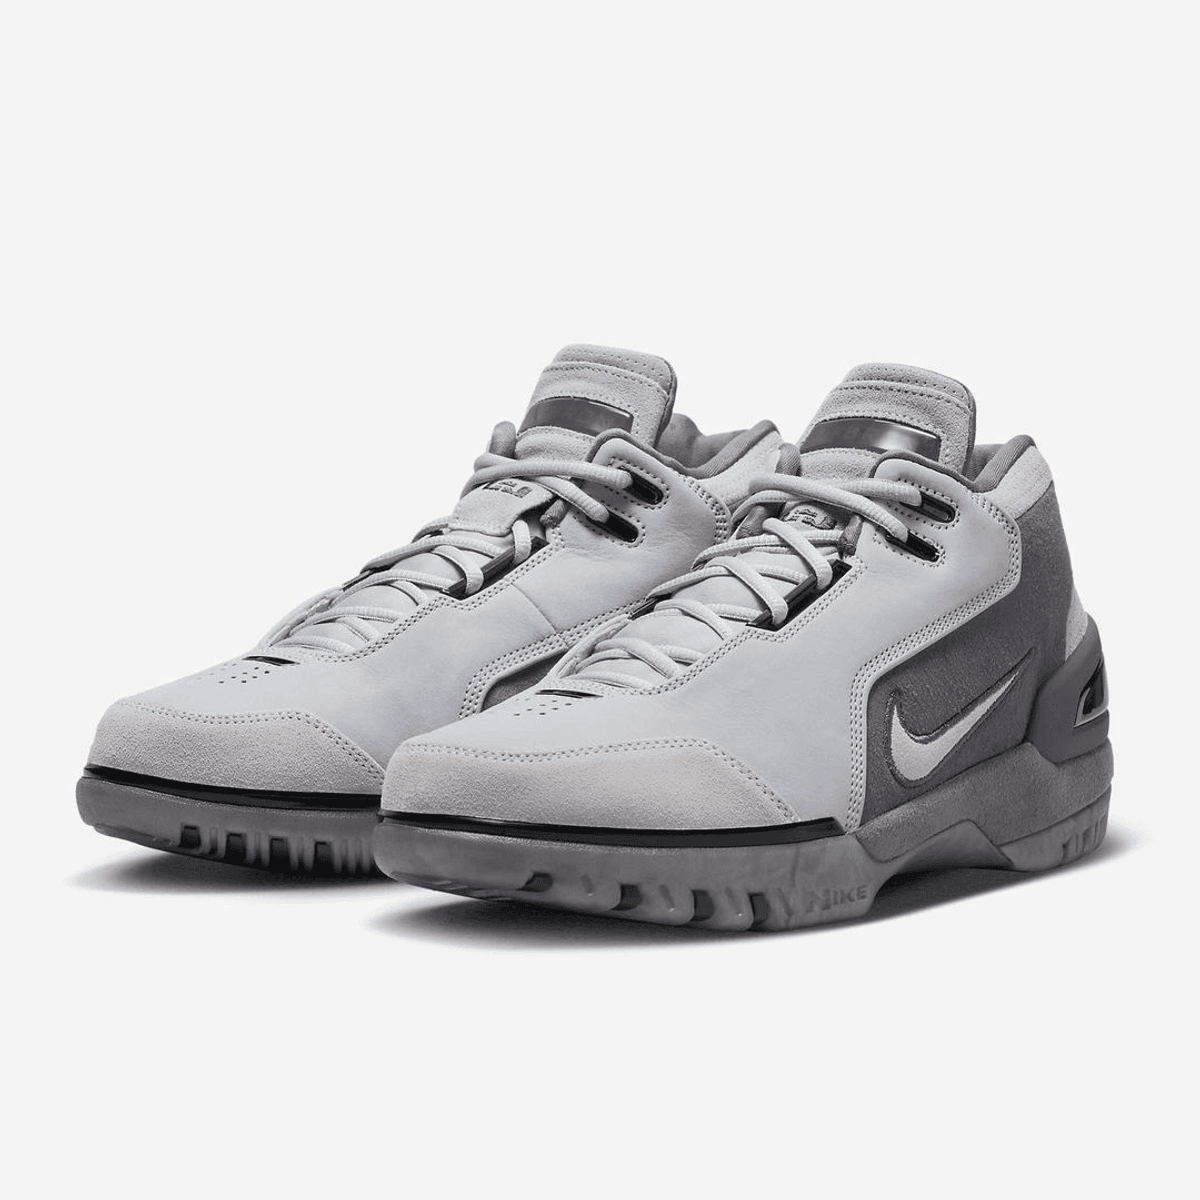 The Nike Air Zoom Generation “Dark Grey” Celebrates Historic King James Milestone